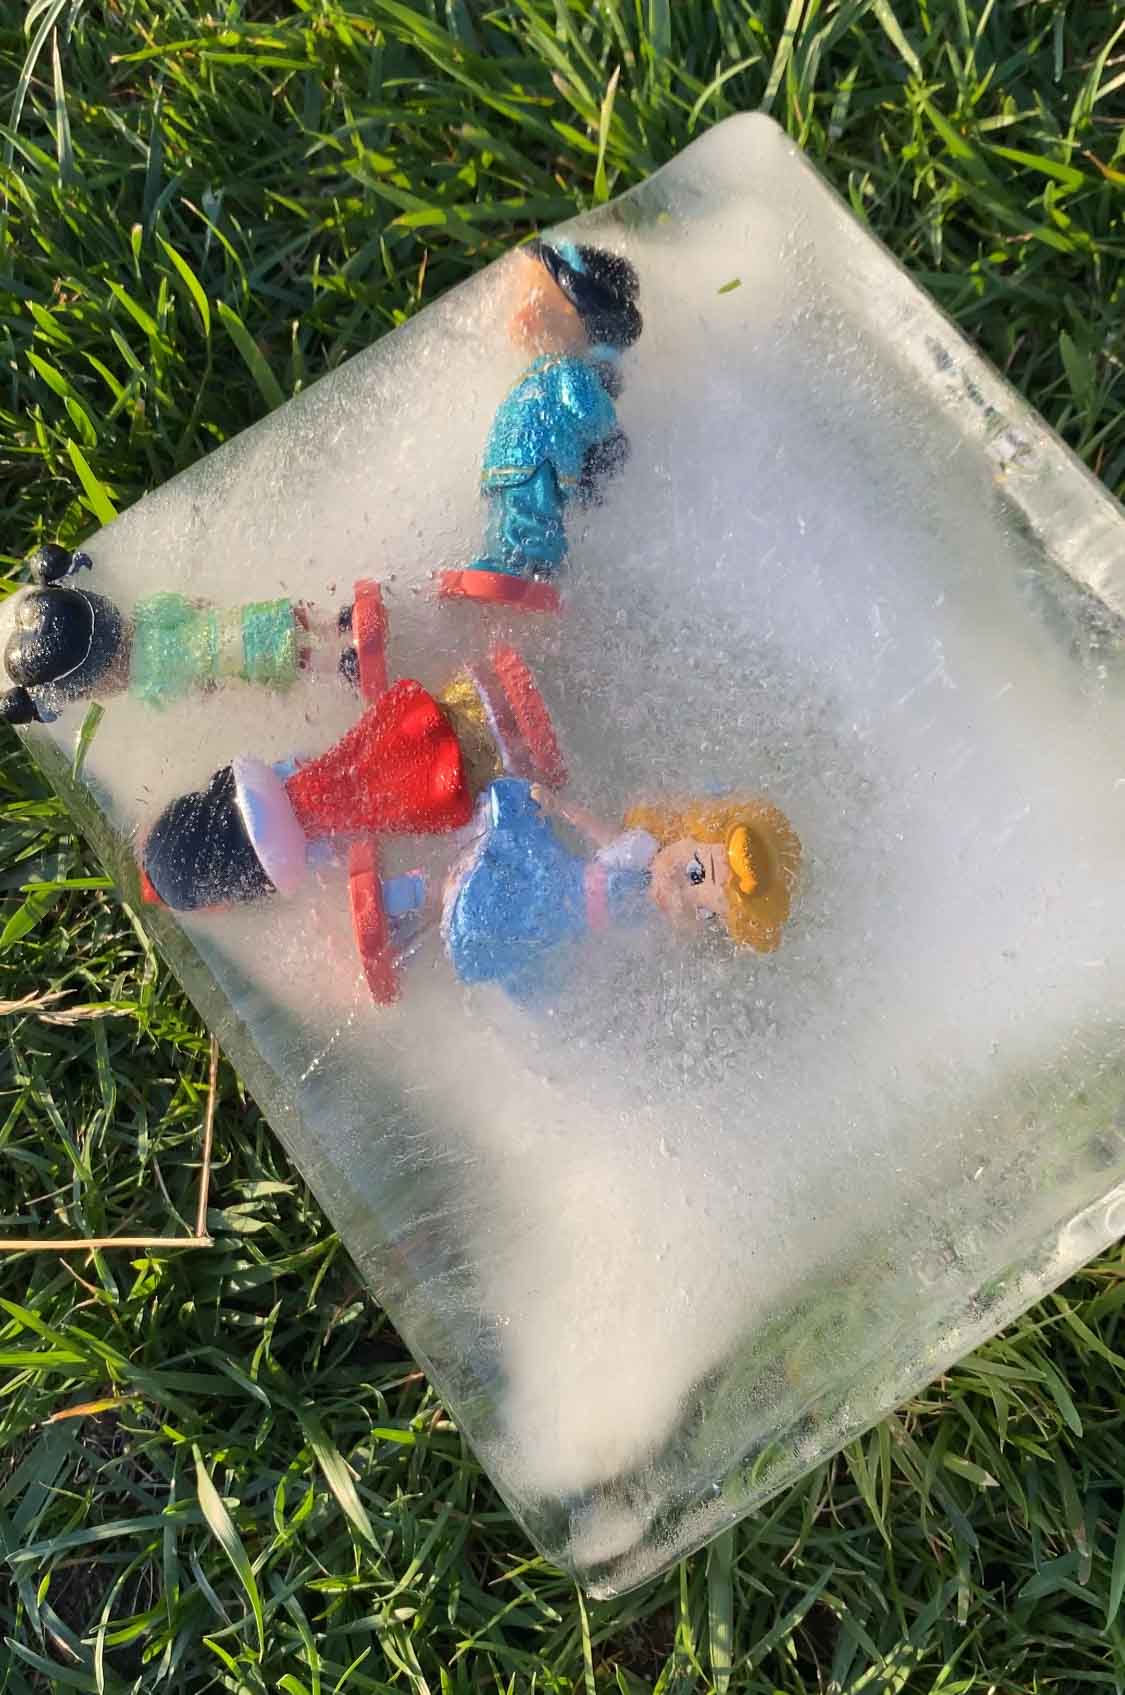 princess figurines frozen in an ice block